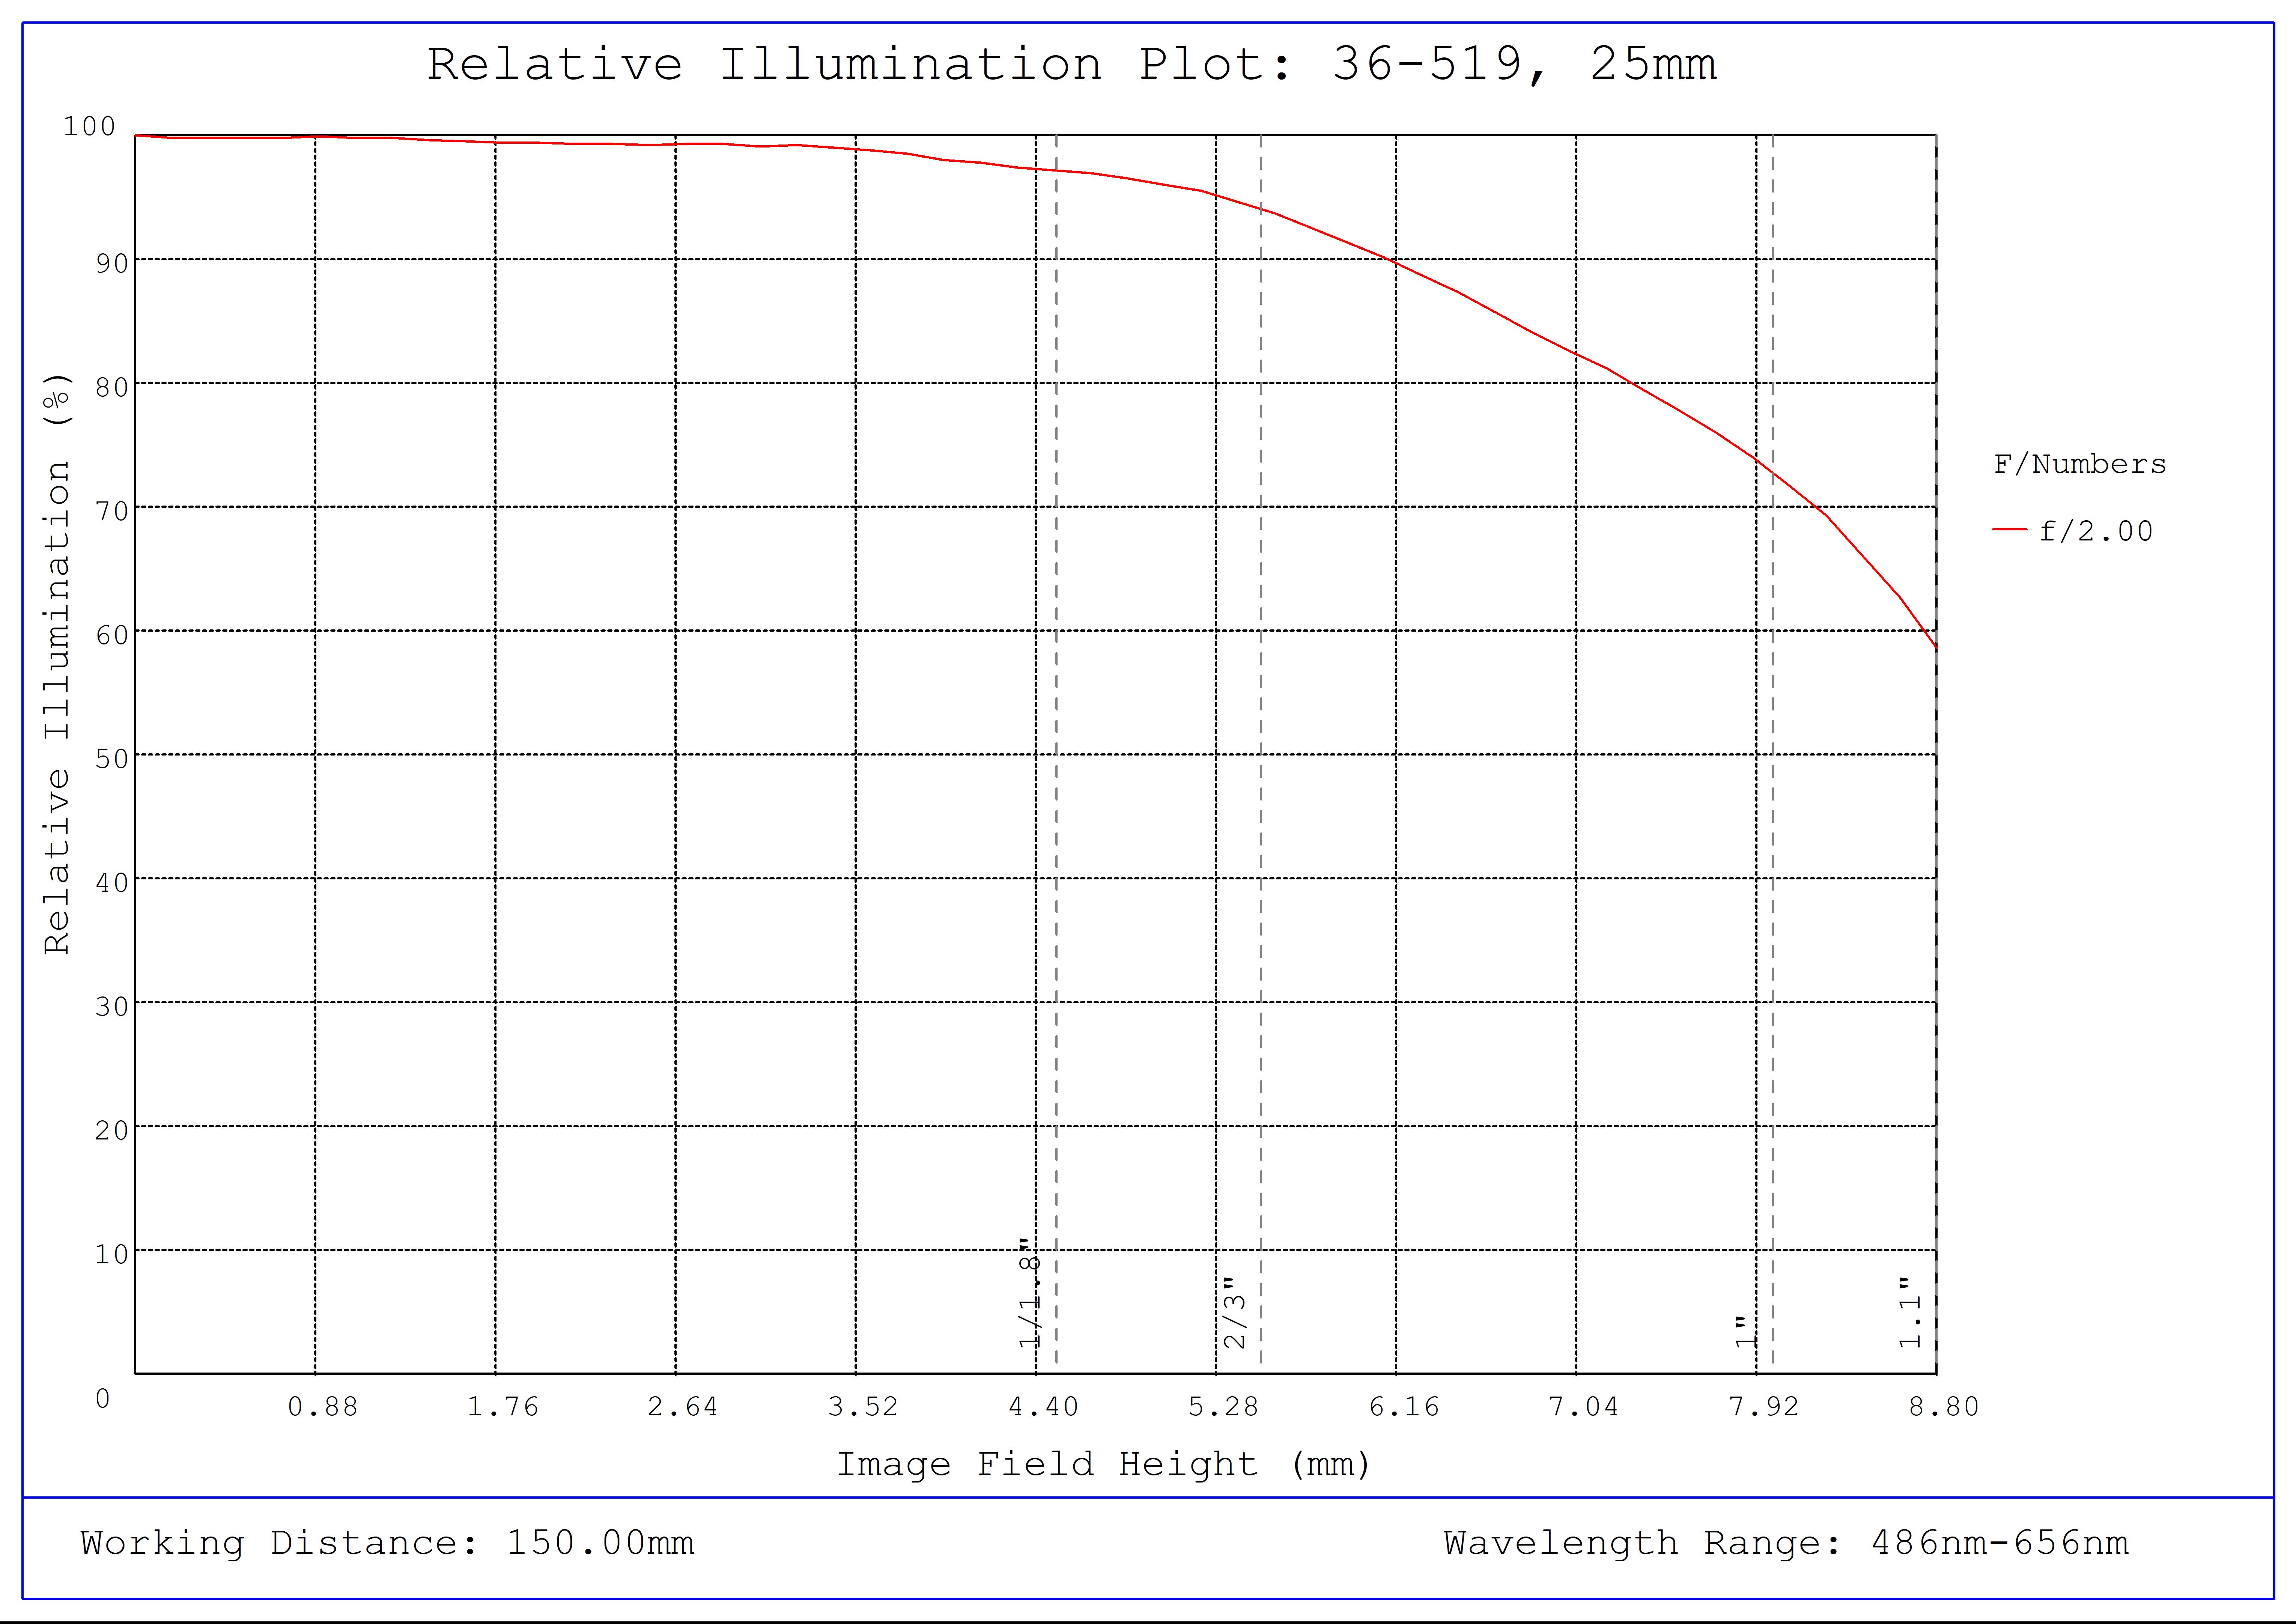 #36-519, 25mm f/2.0, HPr Series Fixed Focal Length Lens, Relative Illumination Plot